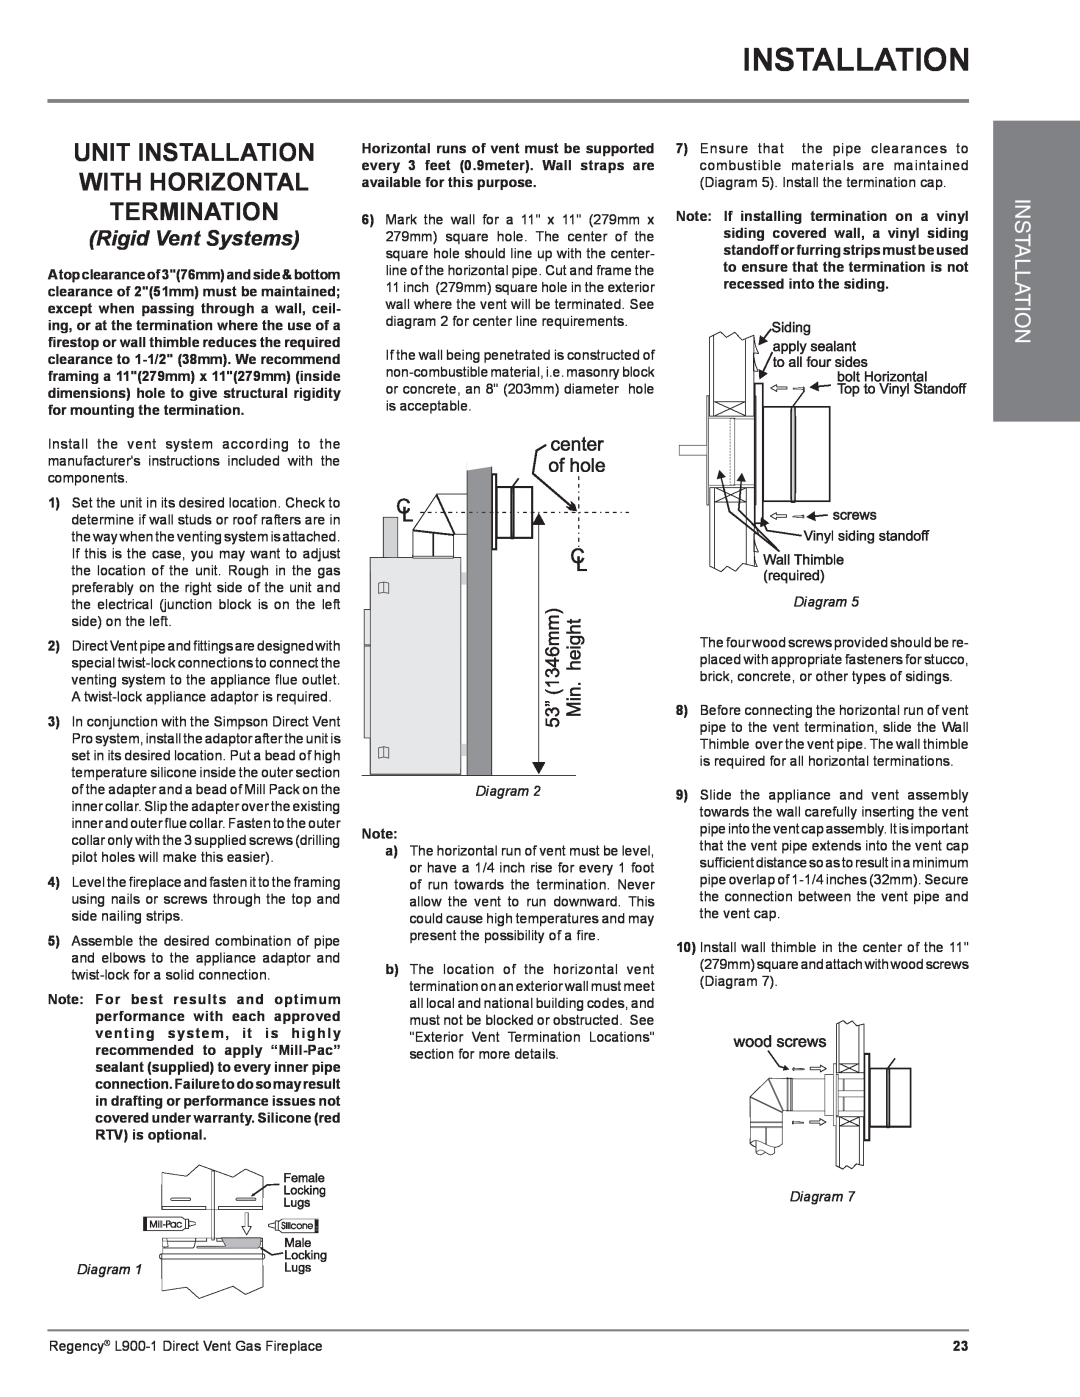 Regency L900-1 Unit Installation With Horizontal Termination, Rigid Vent Systems, Diagram Diagram 